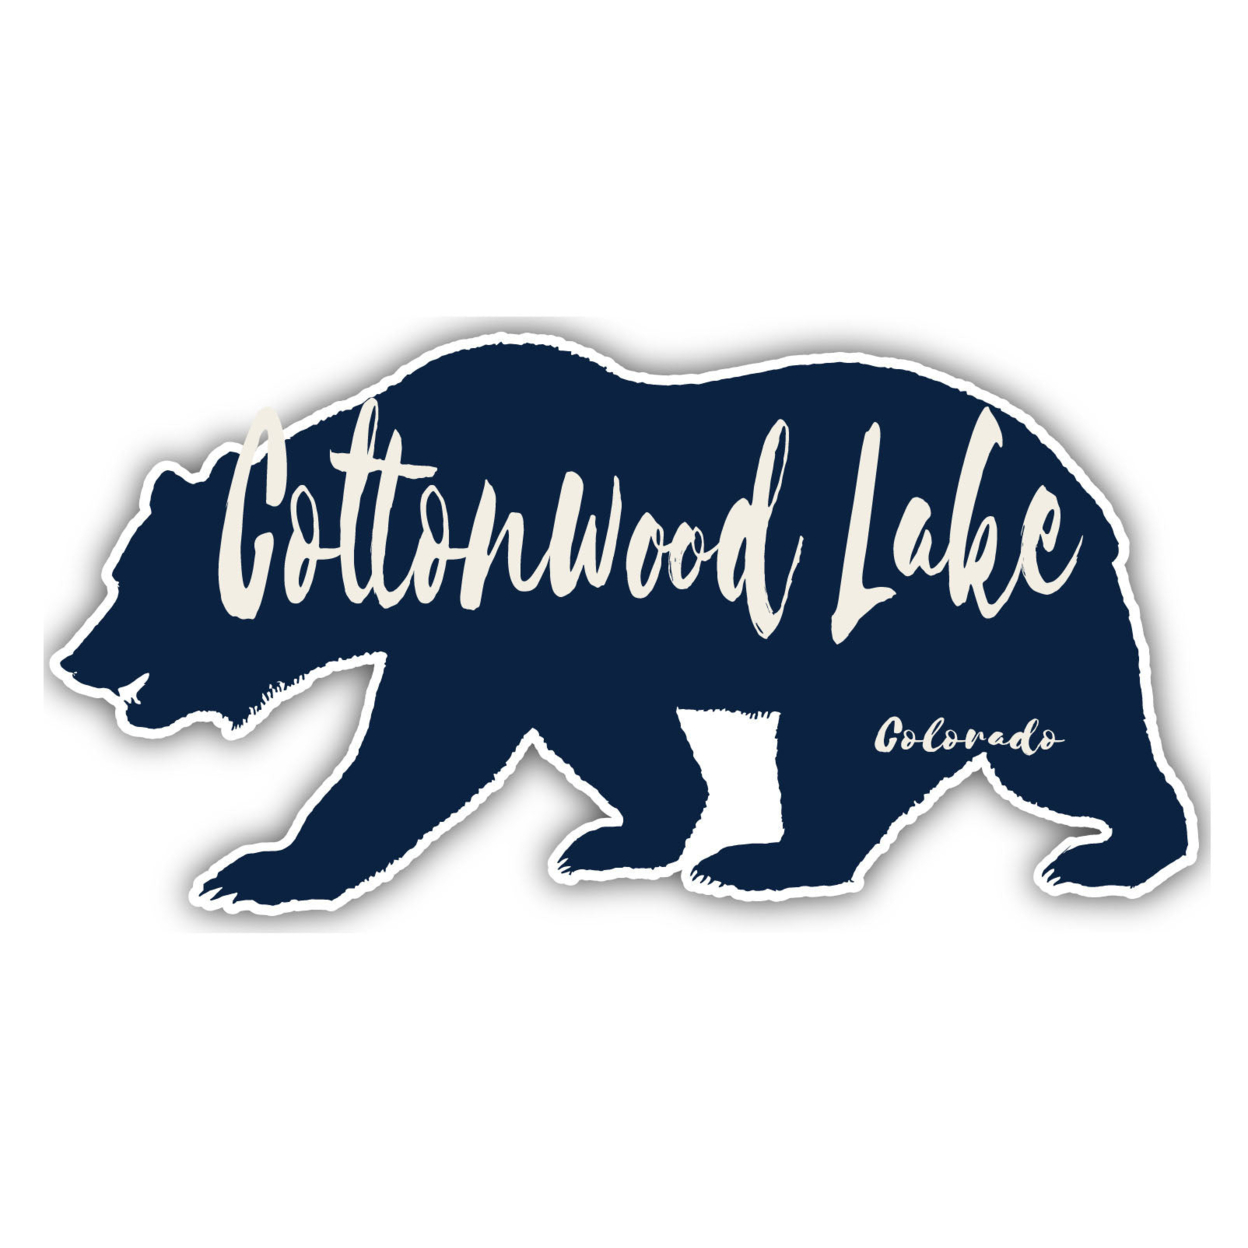 Cottonwood Lake Colorado Souvenir Decorative Stickers (Choose Theme And Size) - Single Unit, 12-Inch, Camp Life